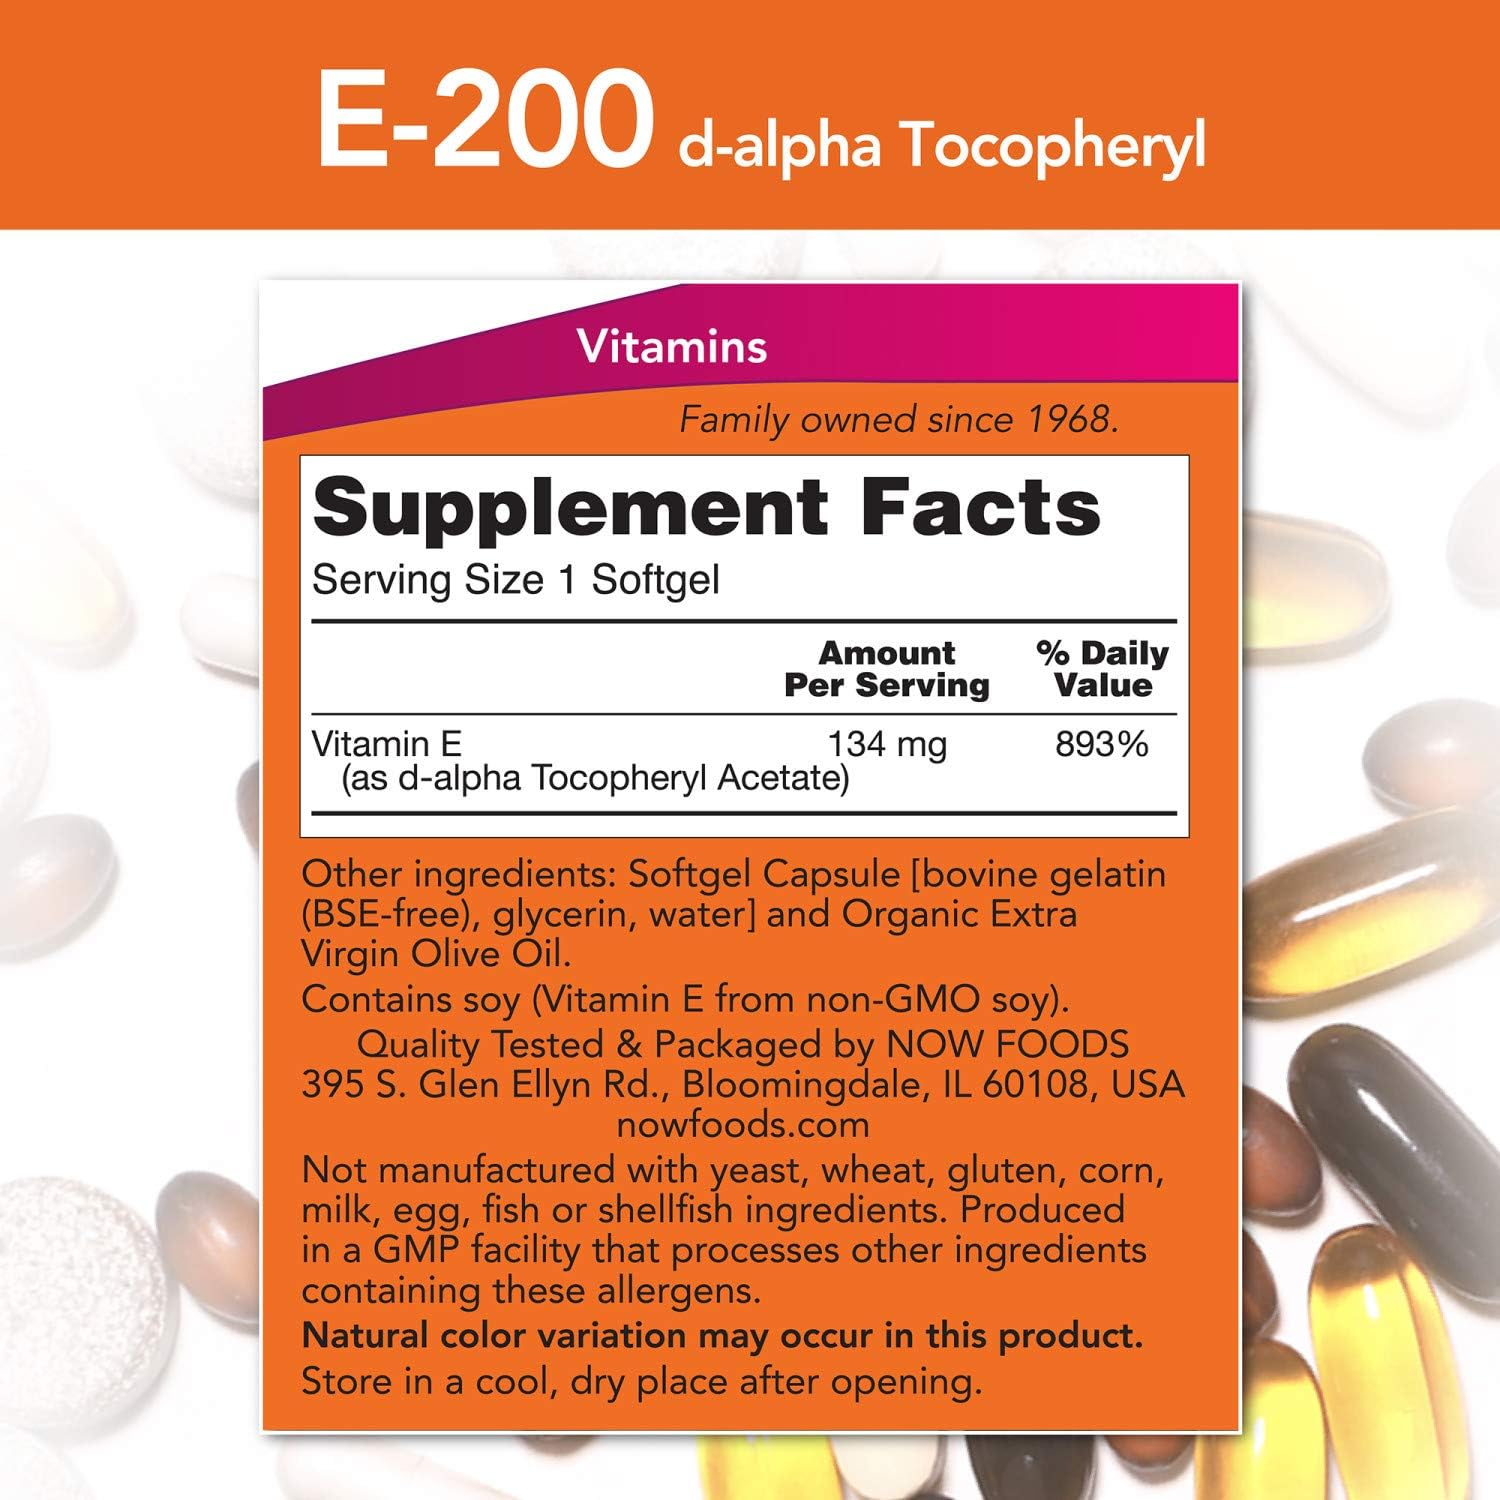  NOW Supplements, Vitamin E-200 IU, D-Alpha Tocopheryl, Antioxidant Protection*, 100 Softgels